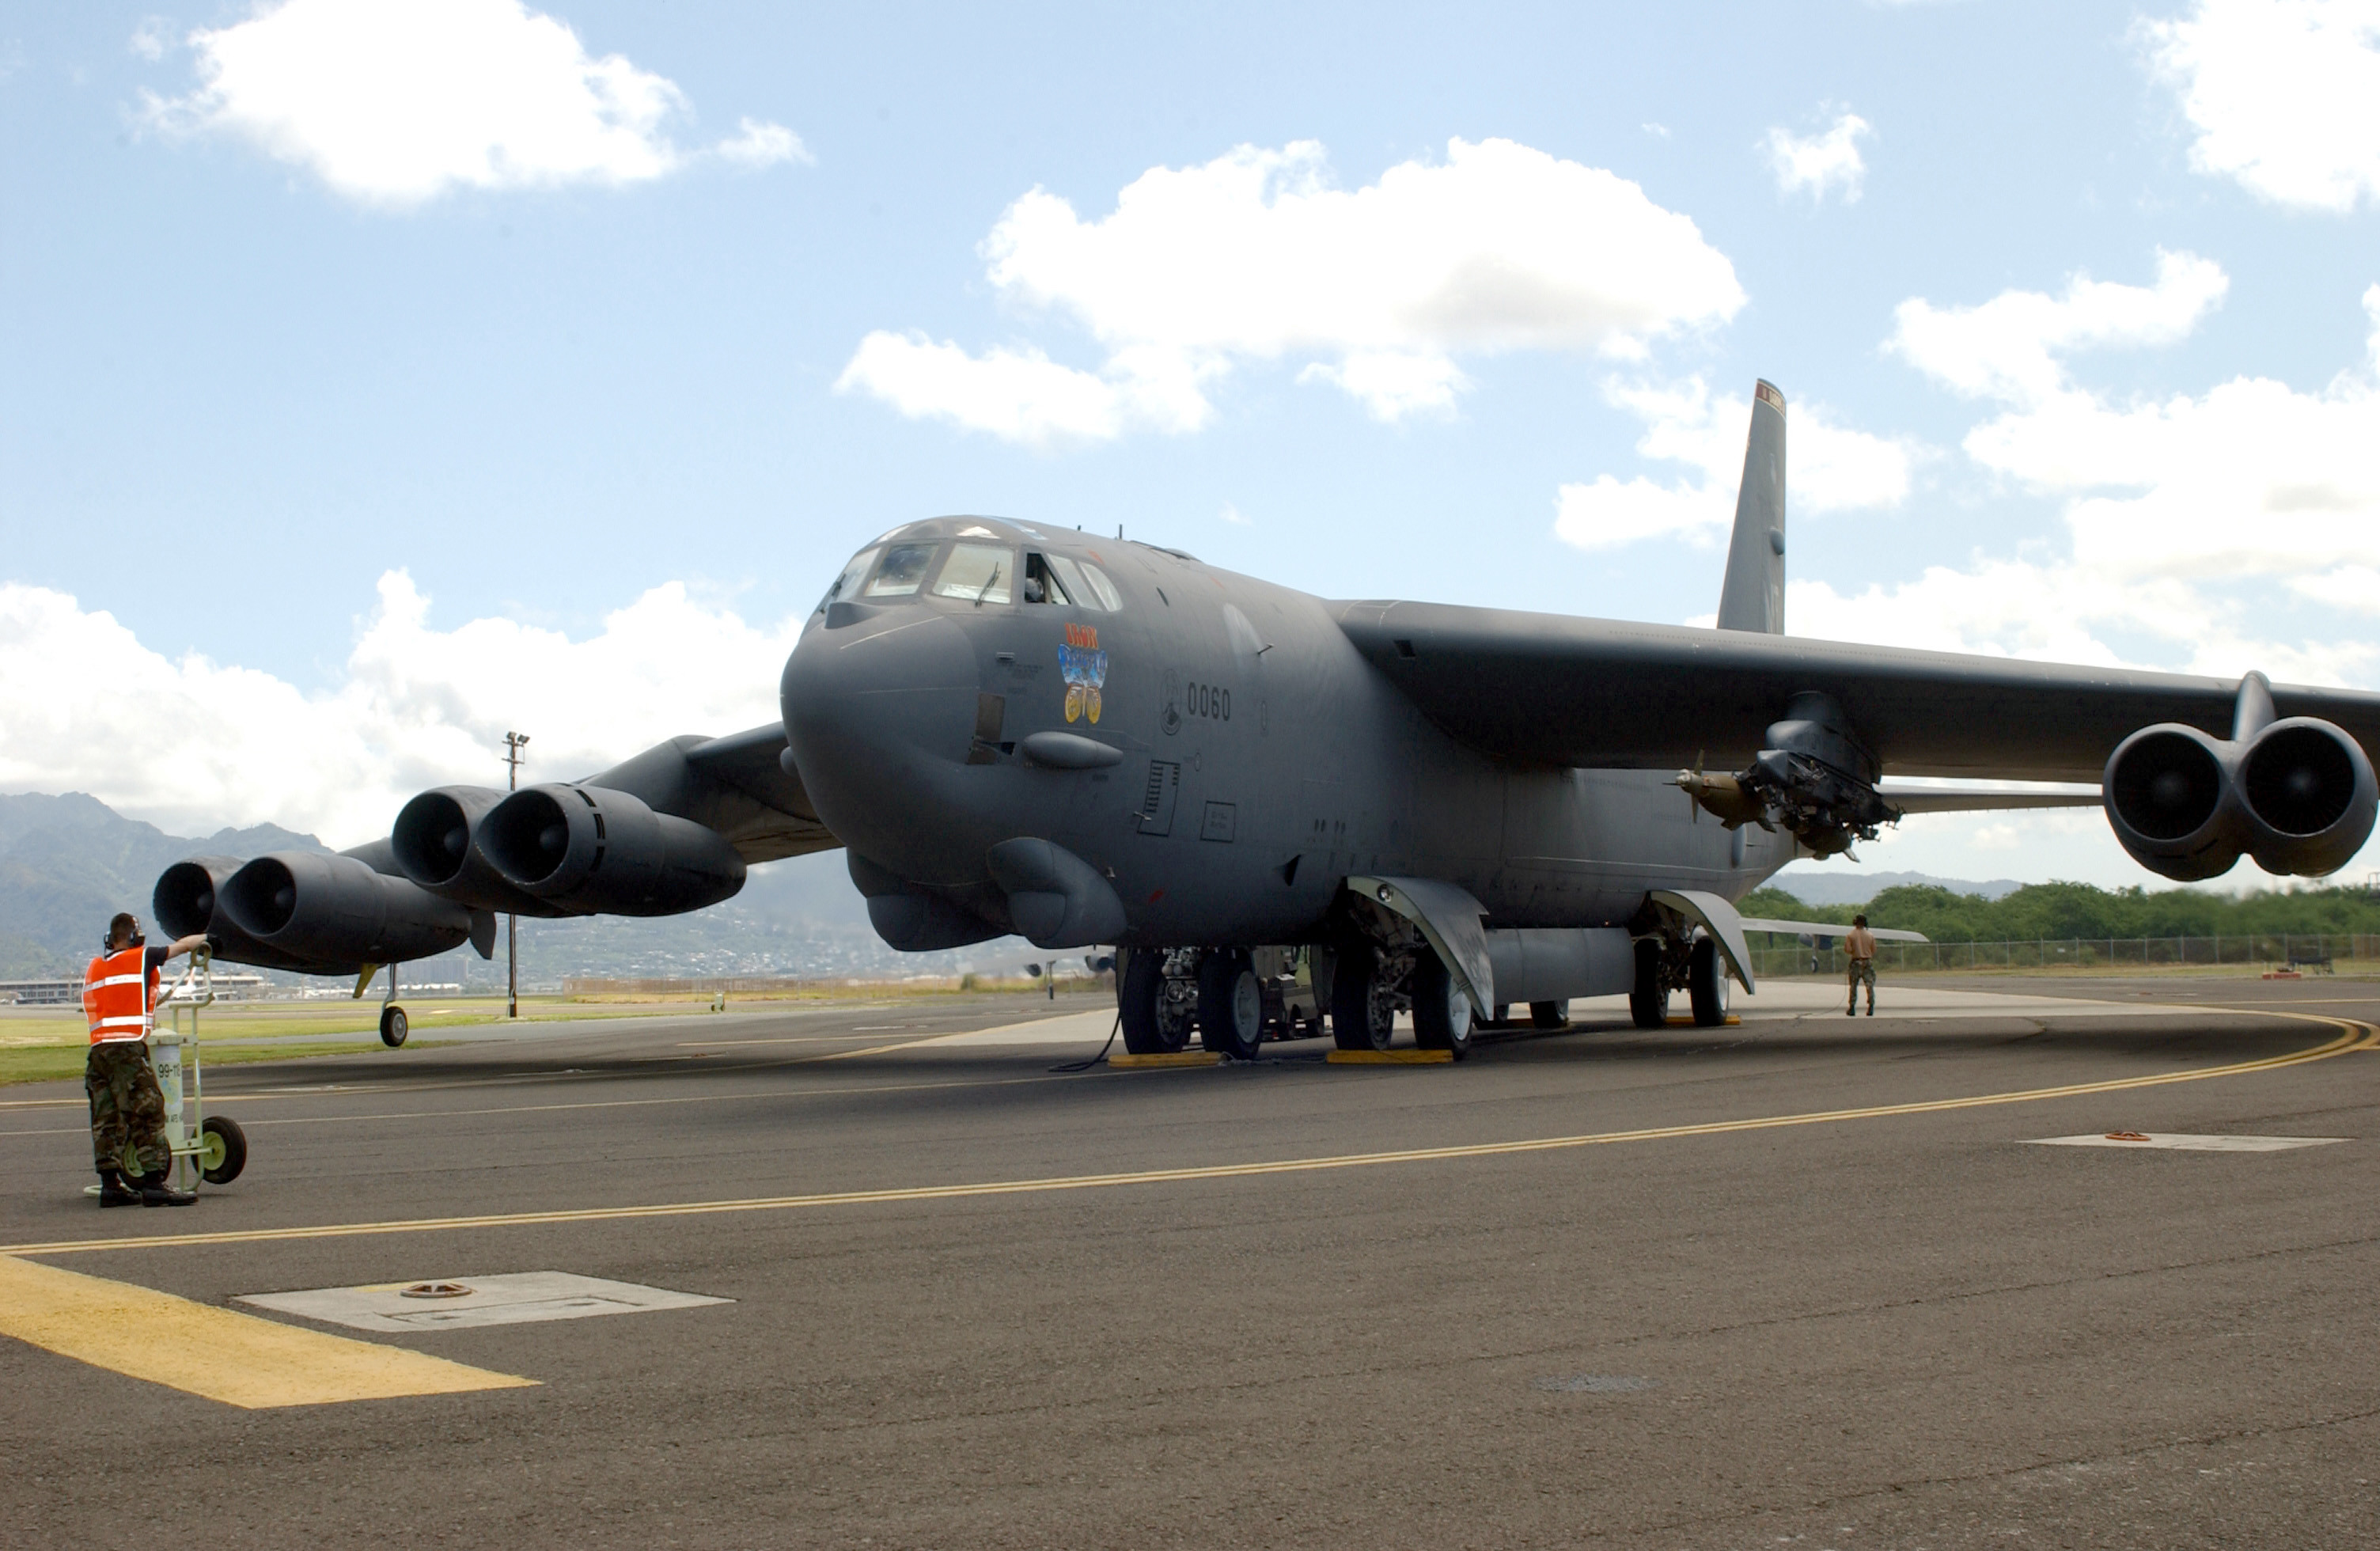 3008x1960 File:B-52 Hawaii.jpg